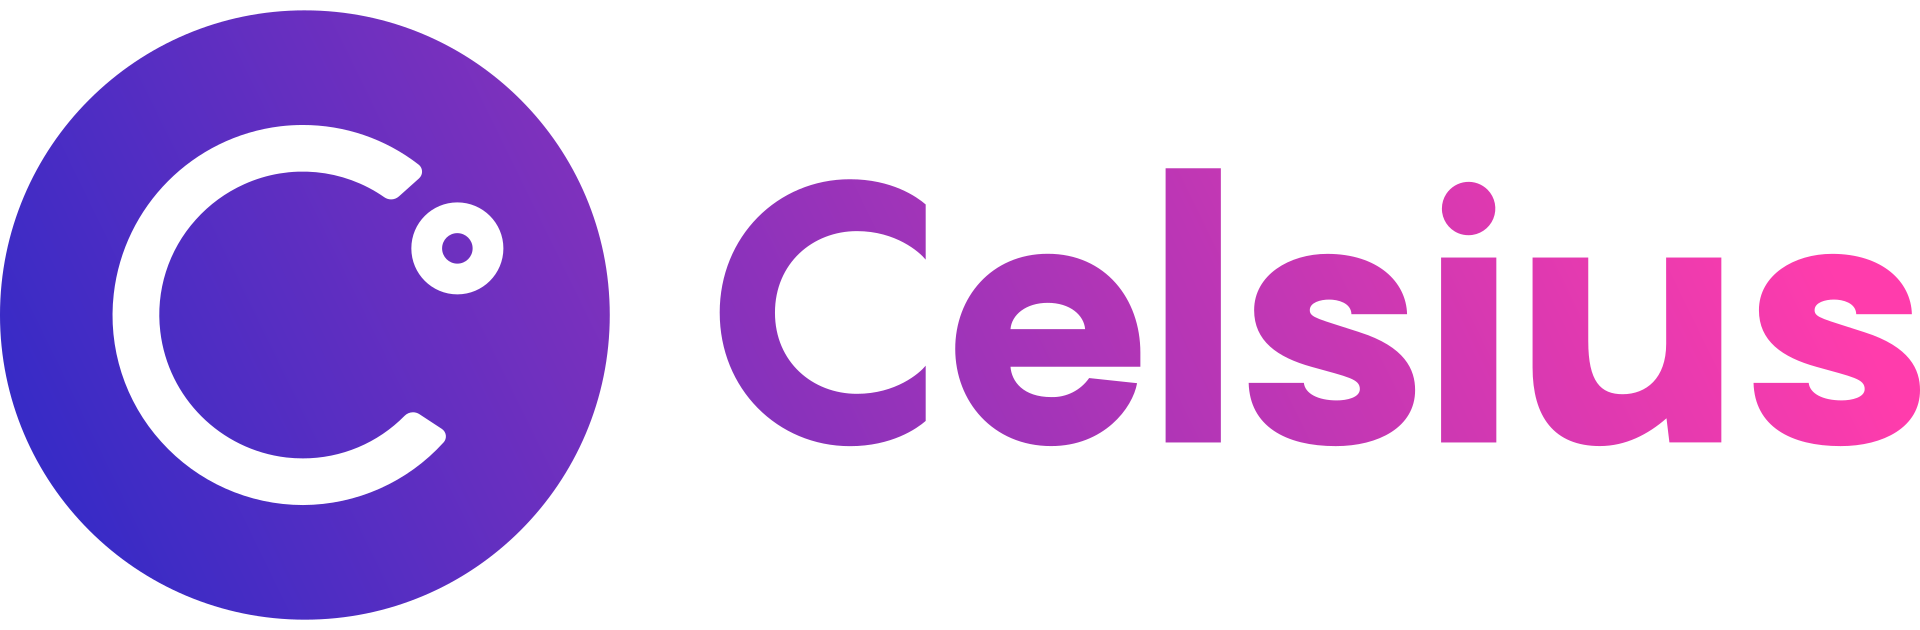 celsius network logo